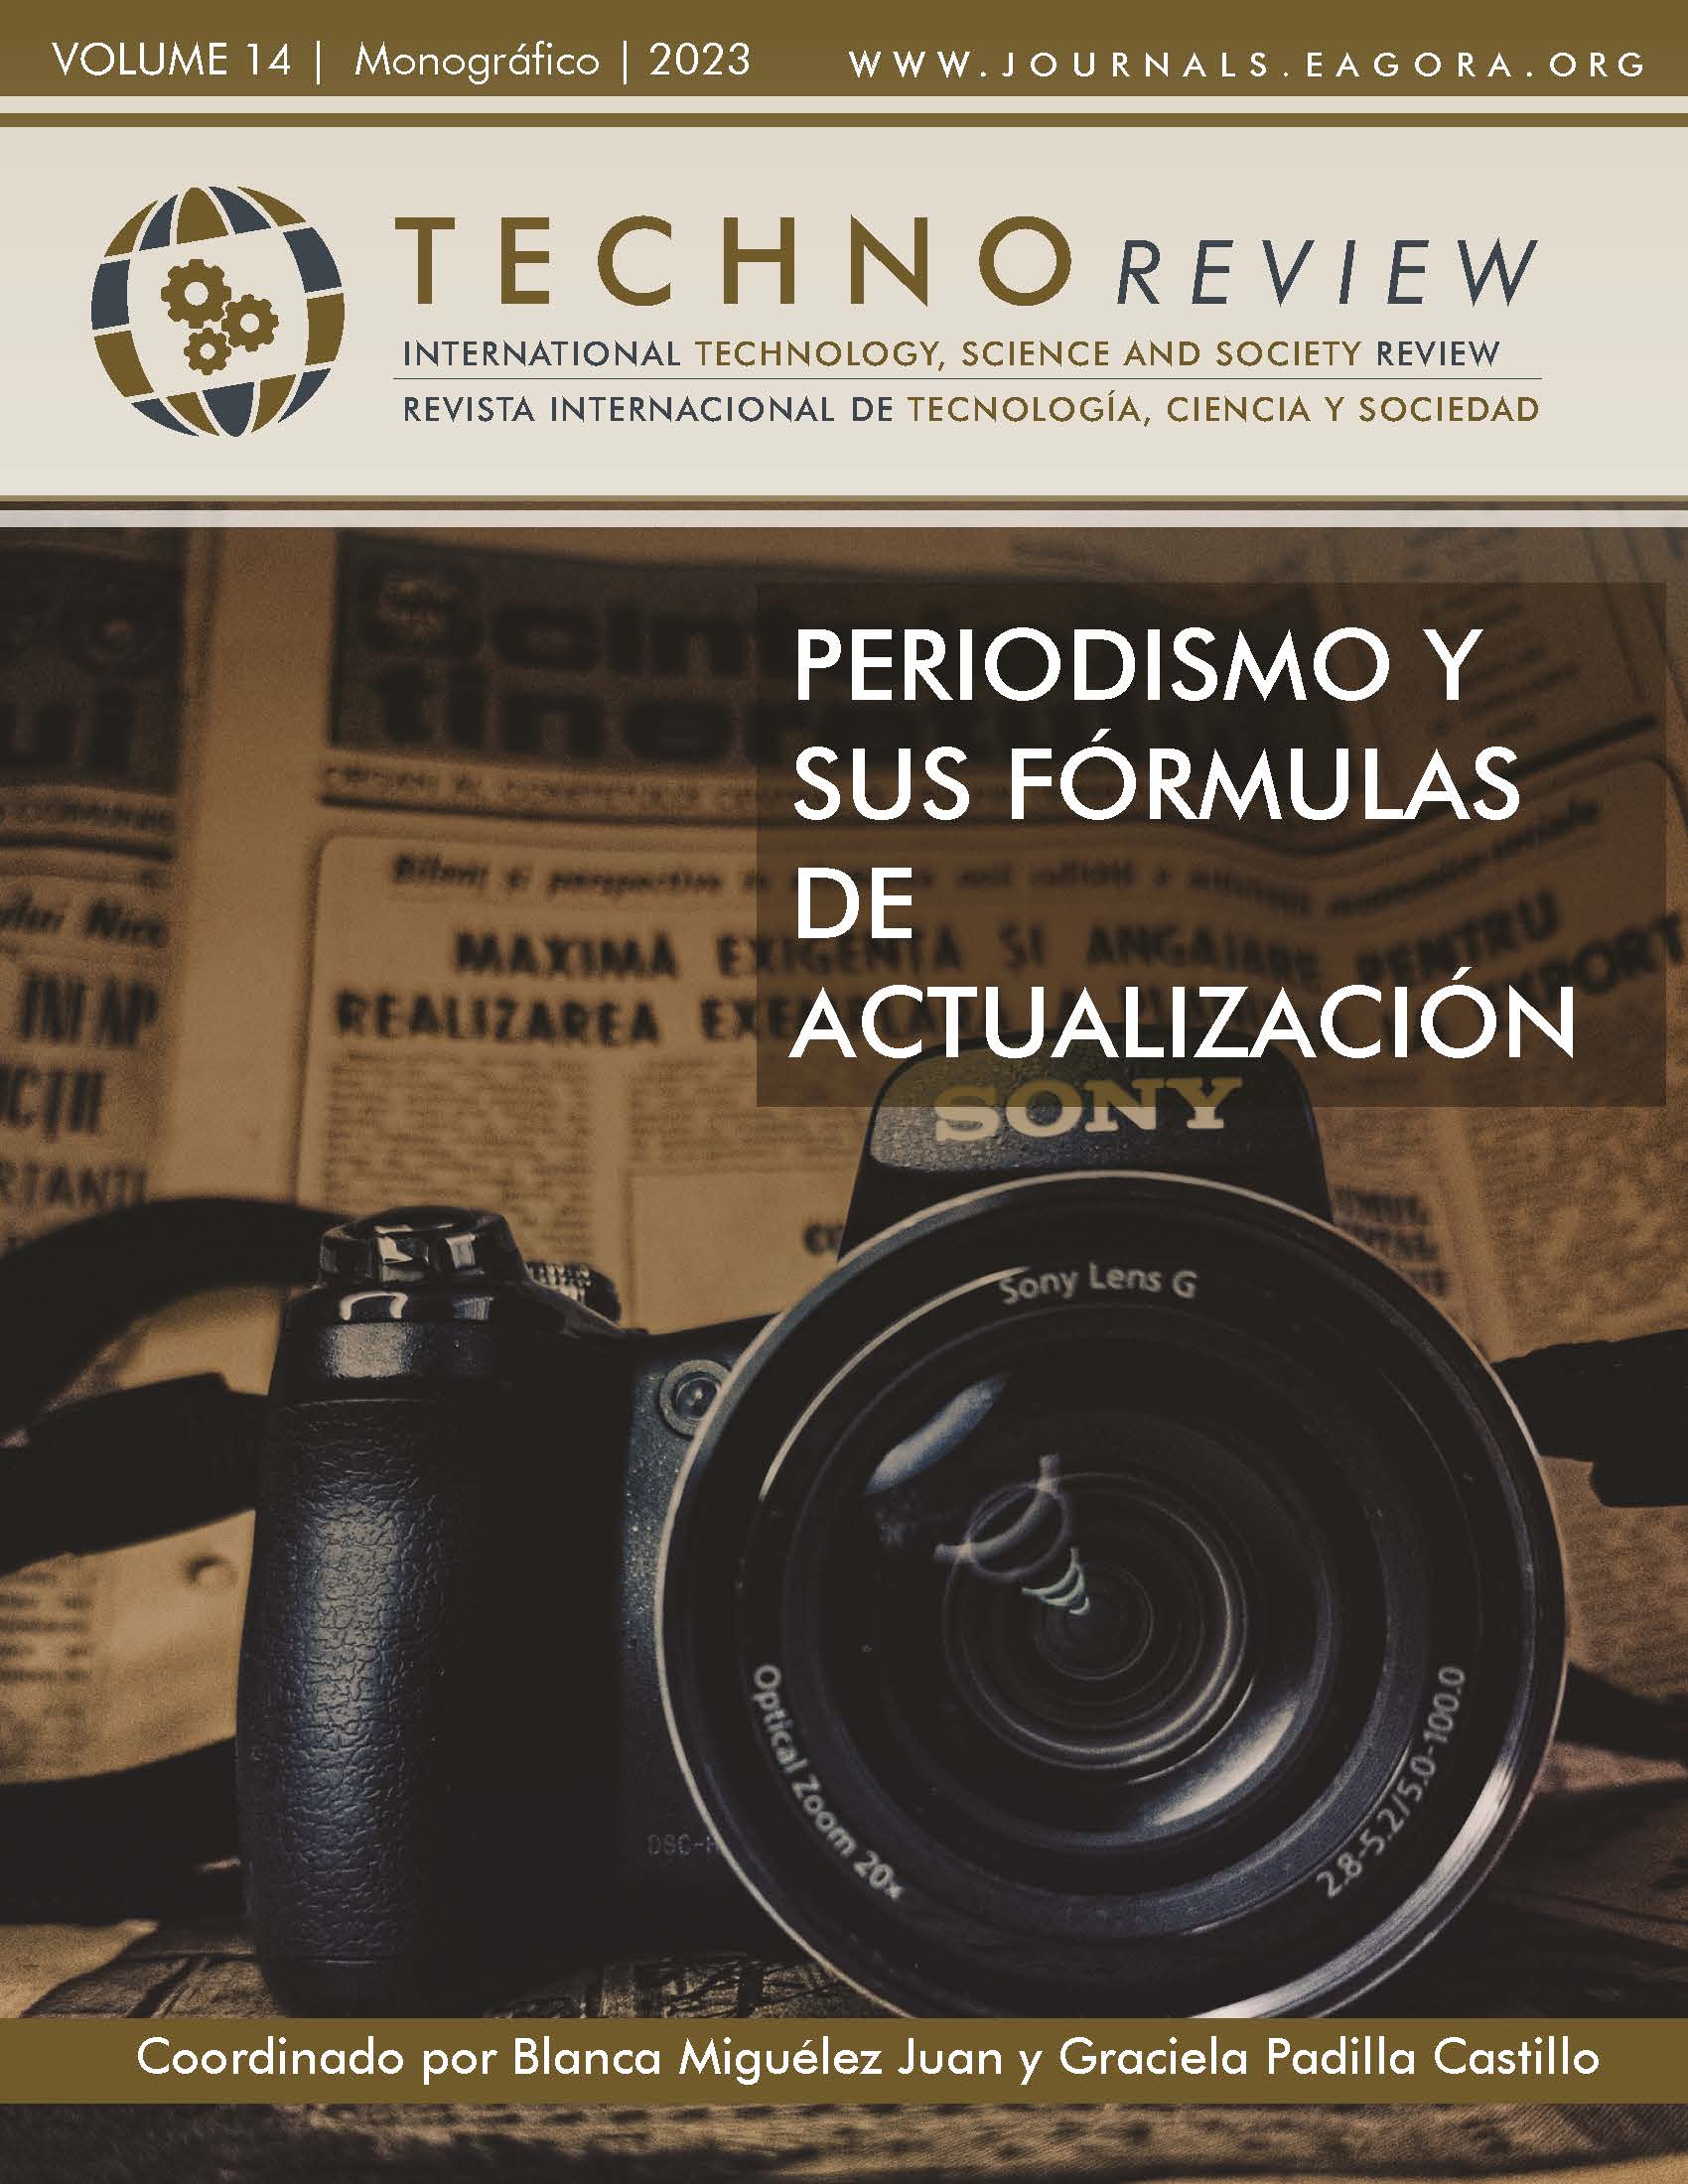 					View Vol. 14 No. 4 (2023): Monograph: "Journalism and its updating formulas"
				